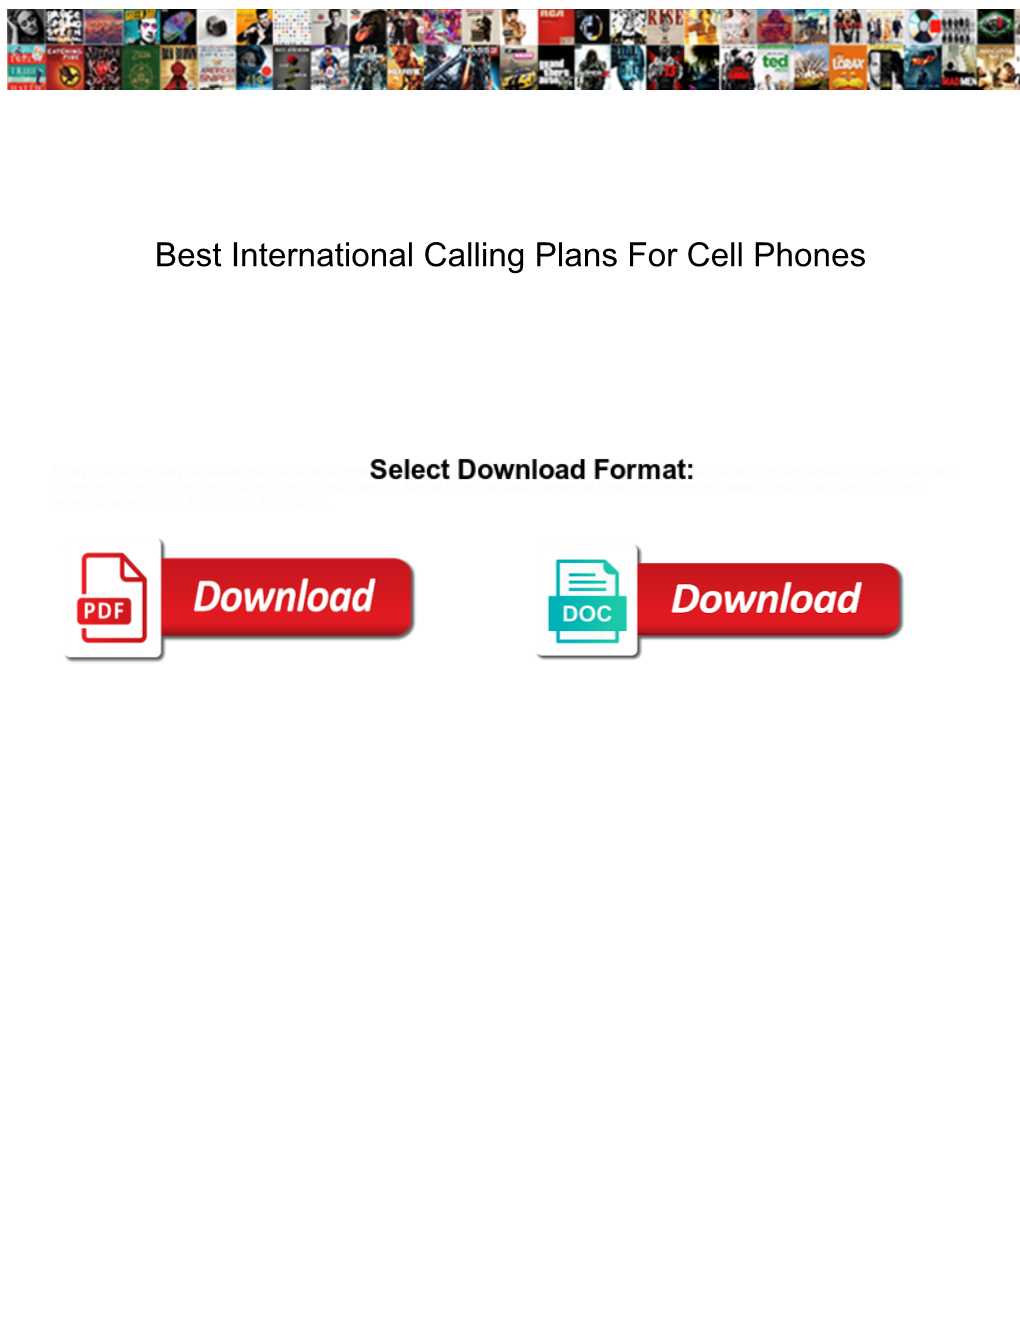 Best International Calling Plans for Cell Phones